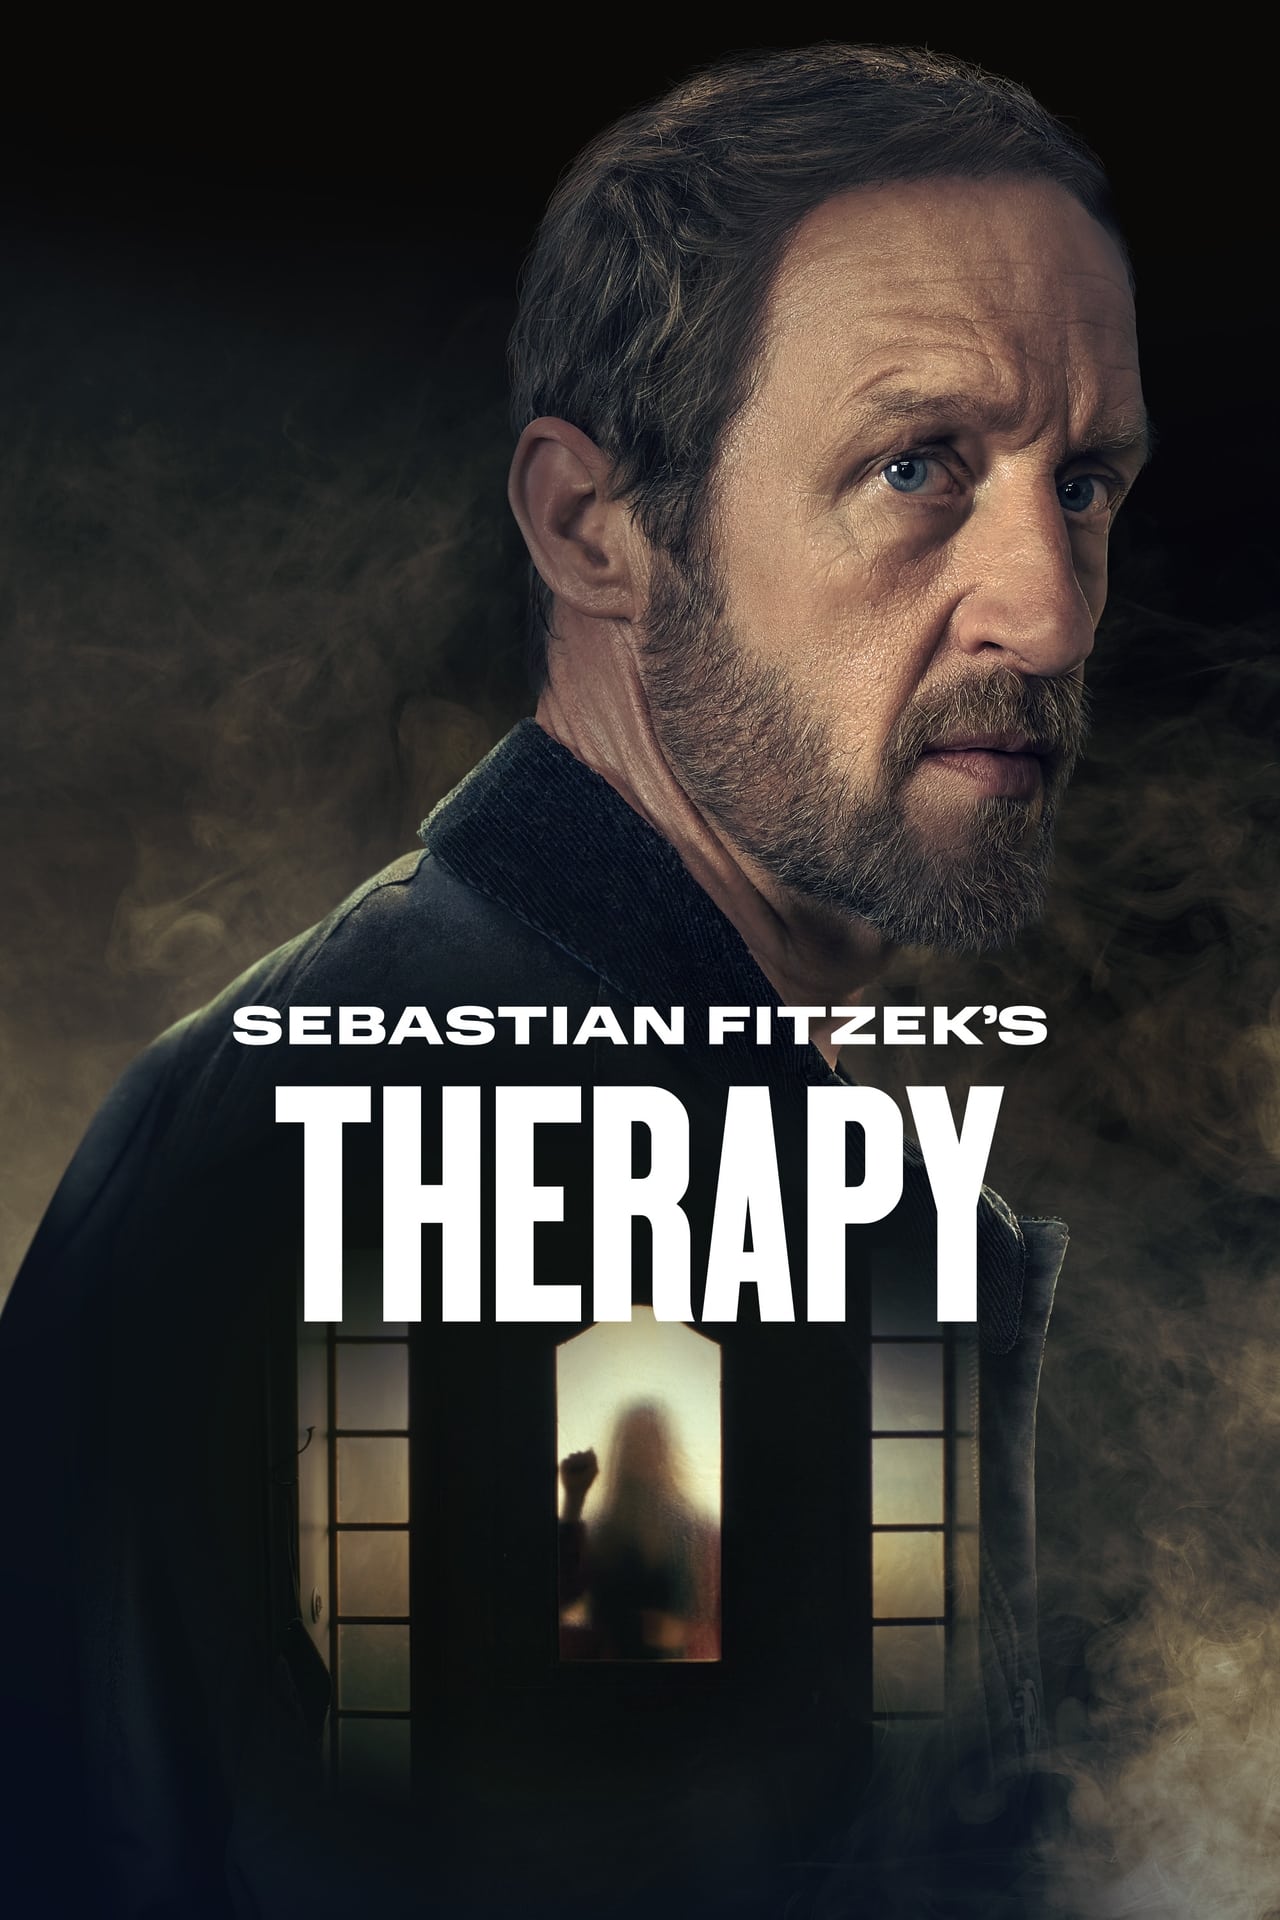 Plakát pro film “Sebastian Fitzek: Terapie”